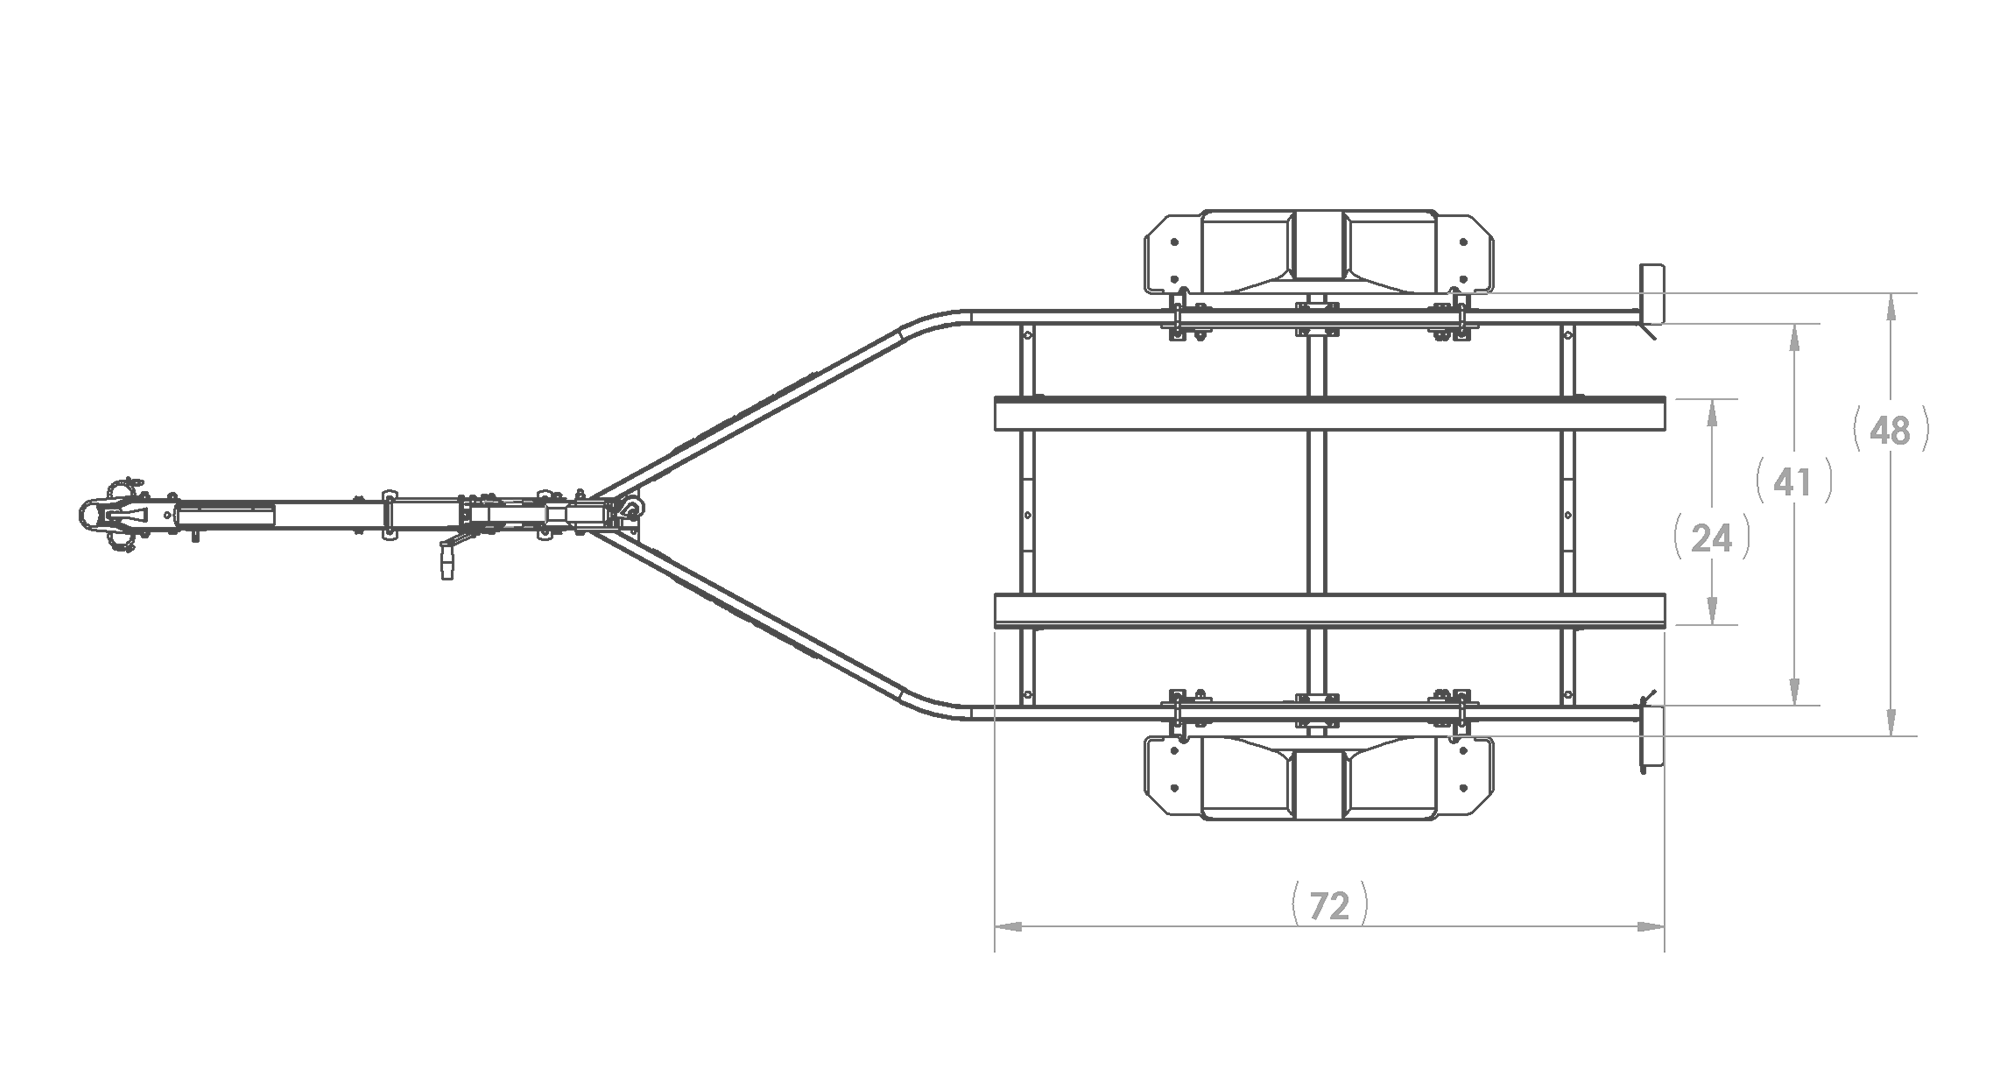 Karavan Trailer's Single Watercraft Steel Trailer w/Step Fender, model number WCE-1500-46, Top View Measurement